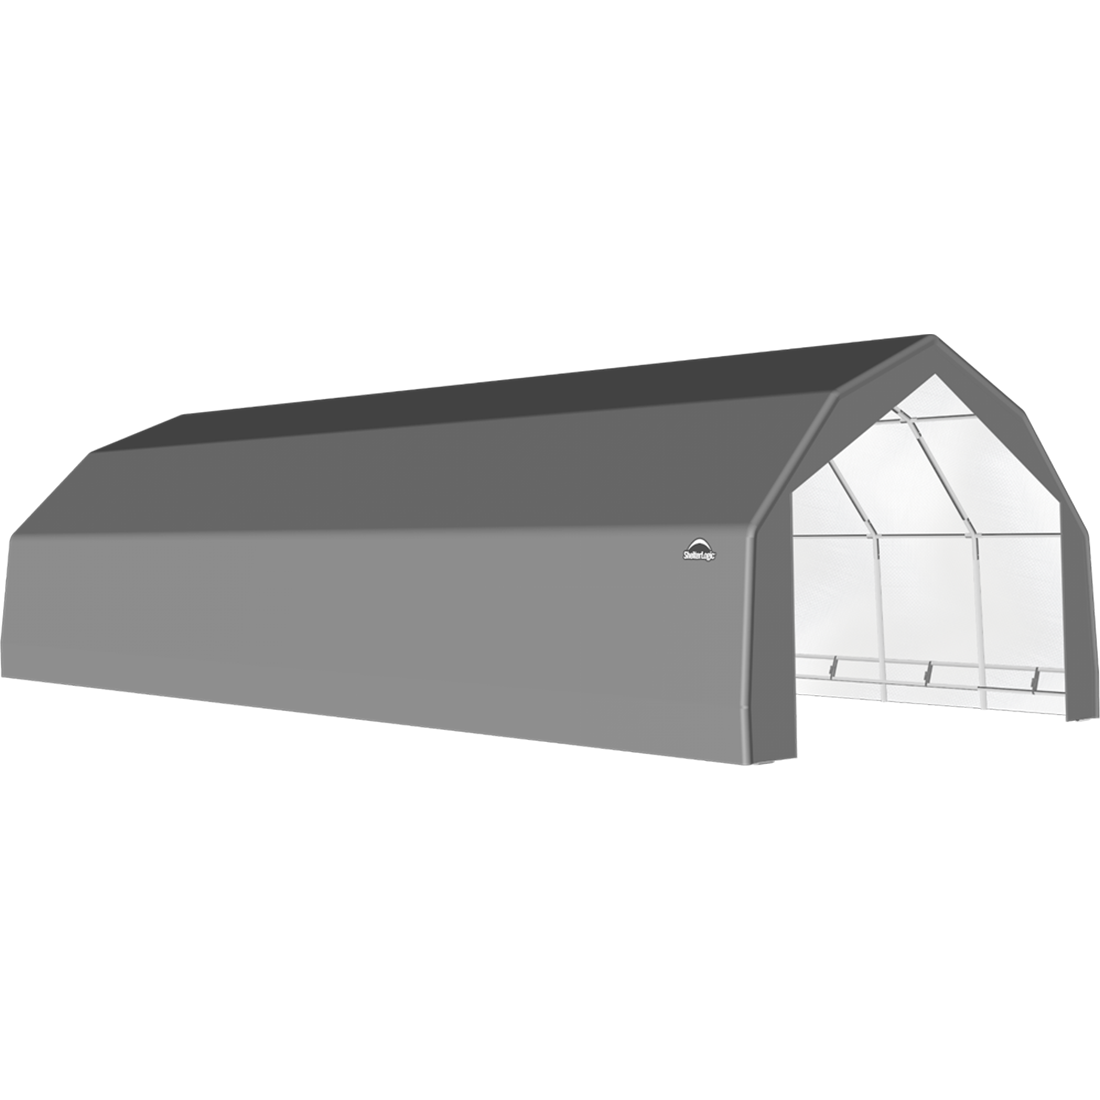 ShelterTech SP Series Barn Shelter, 20 ft. x 36 ft. x 12 ft. Heavy Duty PVC 14.5 oz. Gray